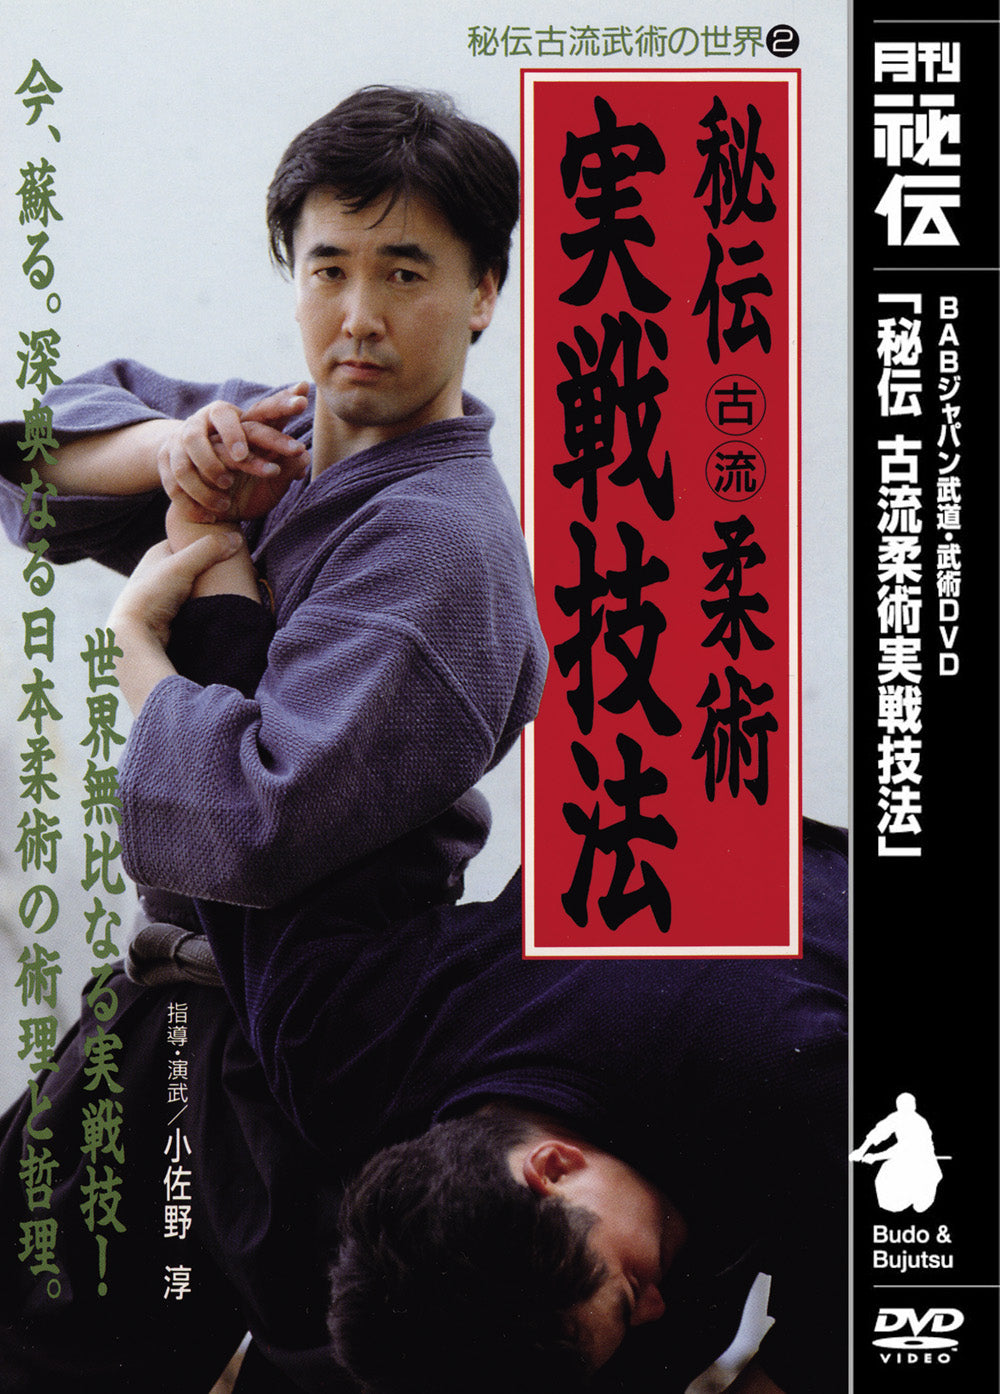 El mundo de Koryu Bujutsu DVD 3 de Jun Osano